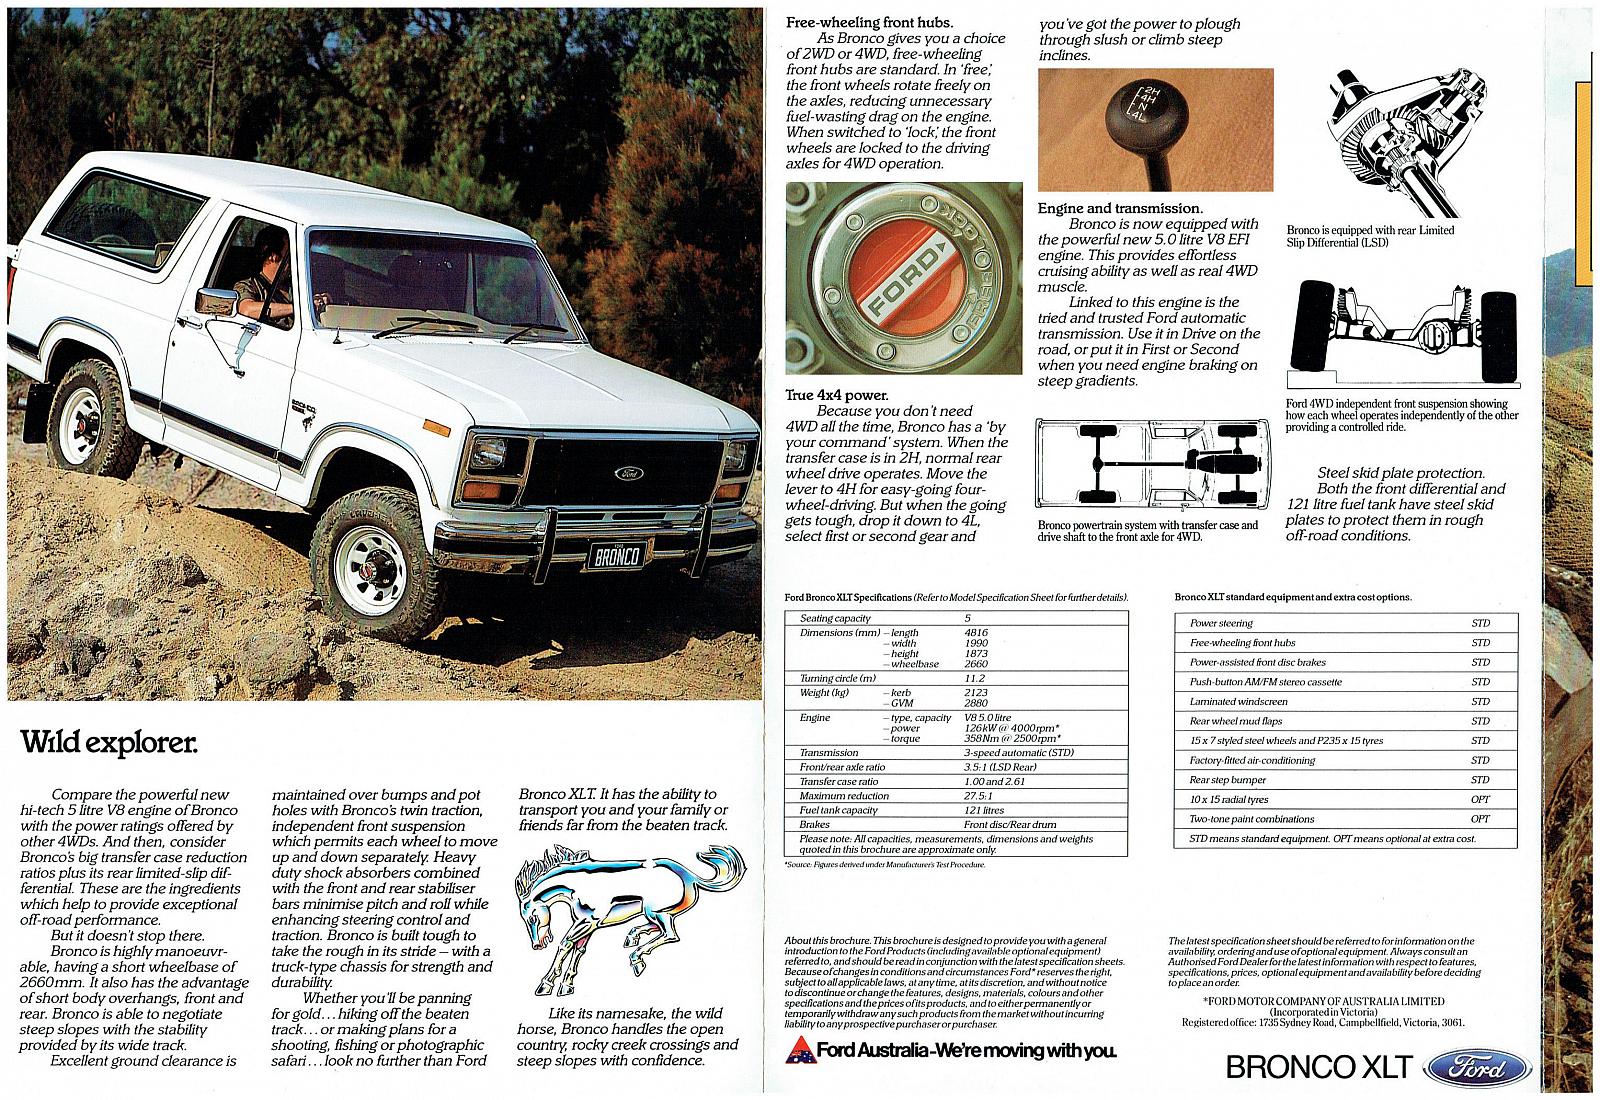 1986 Ford Bronco (Aus)-06-07.jpg-2022-12-7 13.51.59